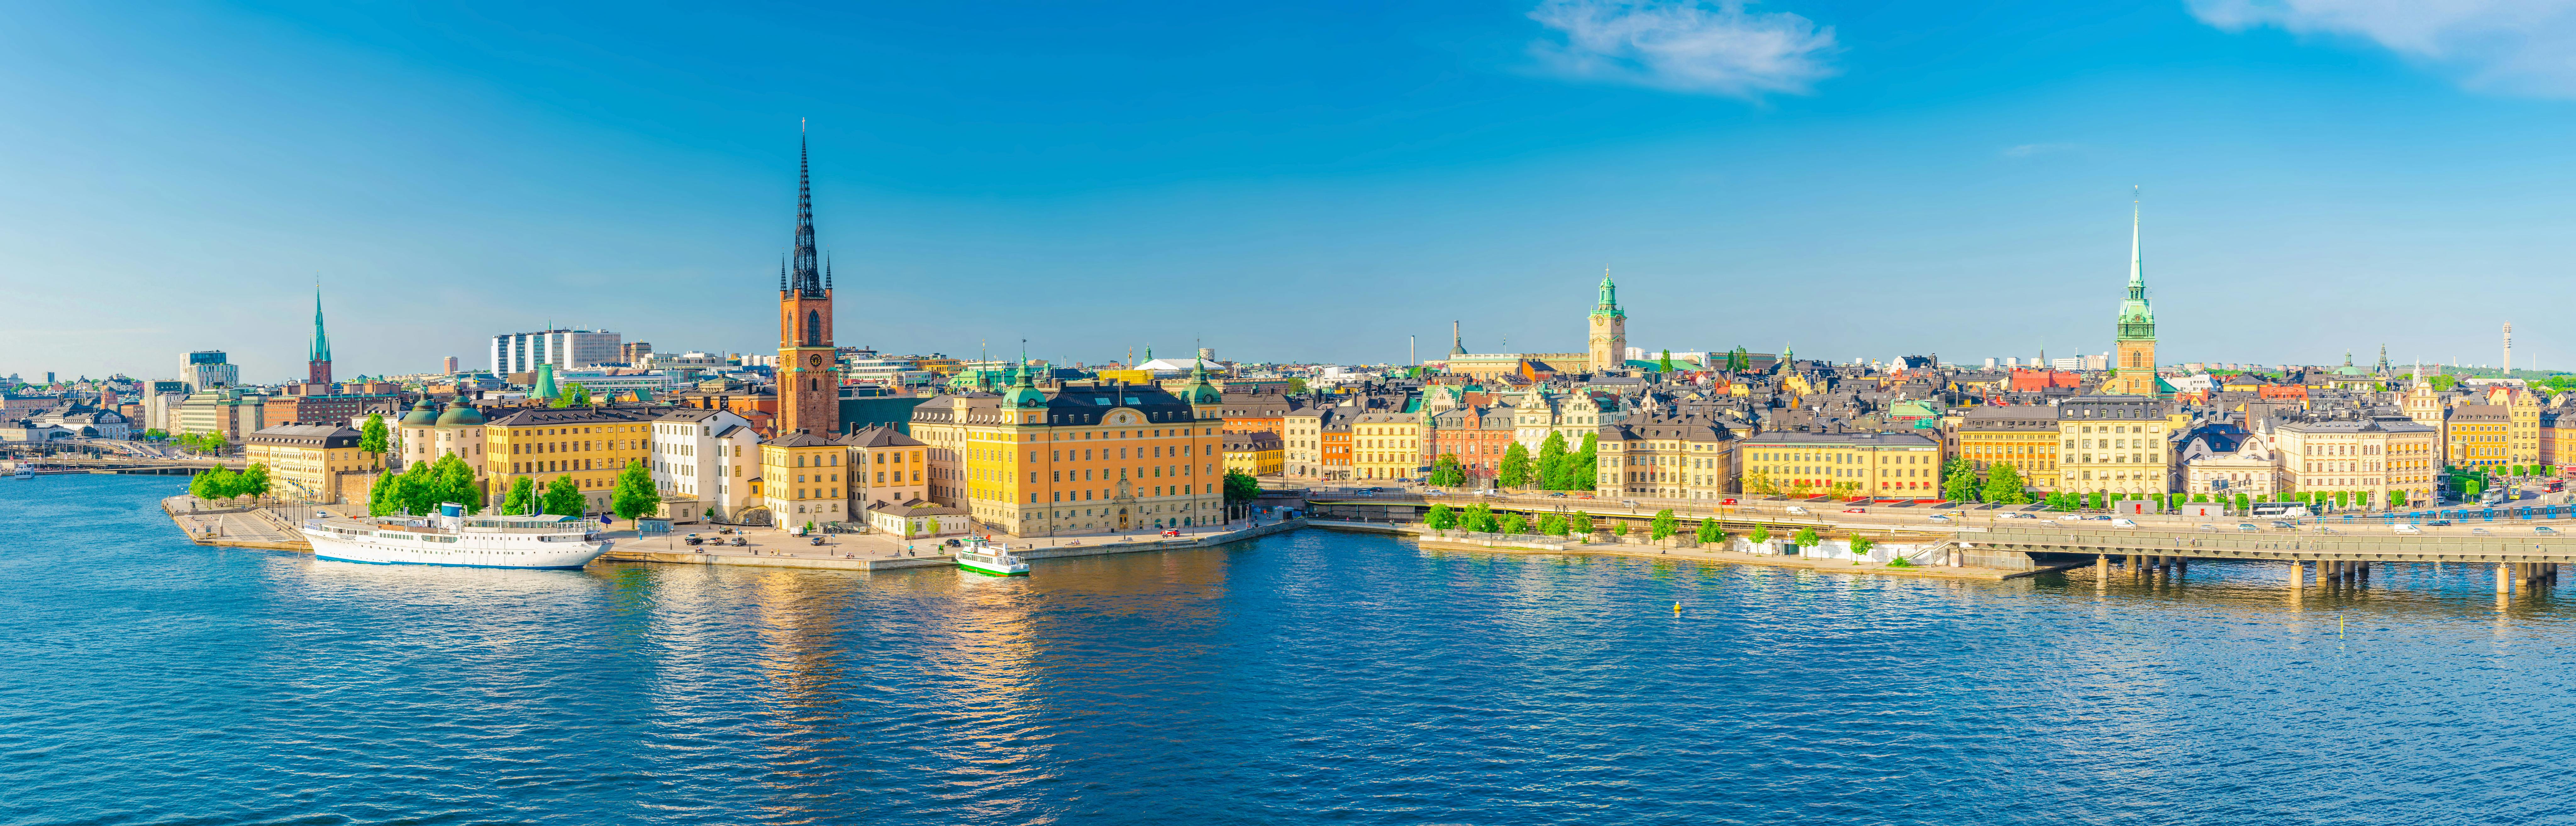 Privat rundtur till fots av Stockholms fantastiska arkitektur